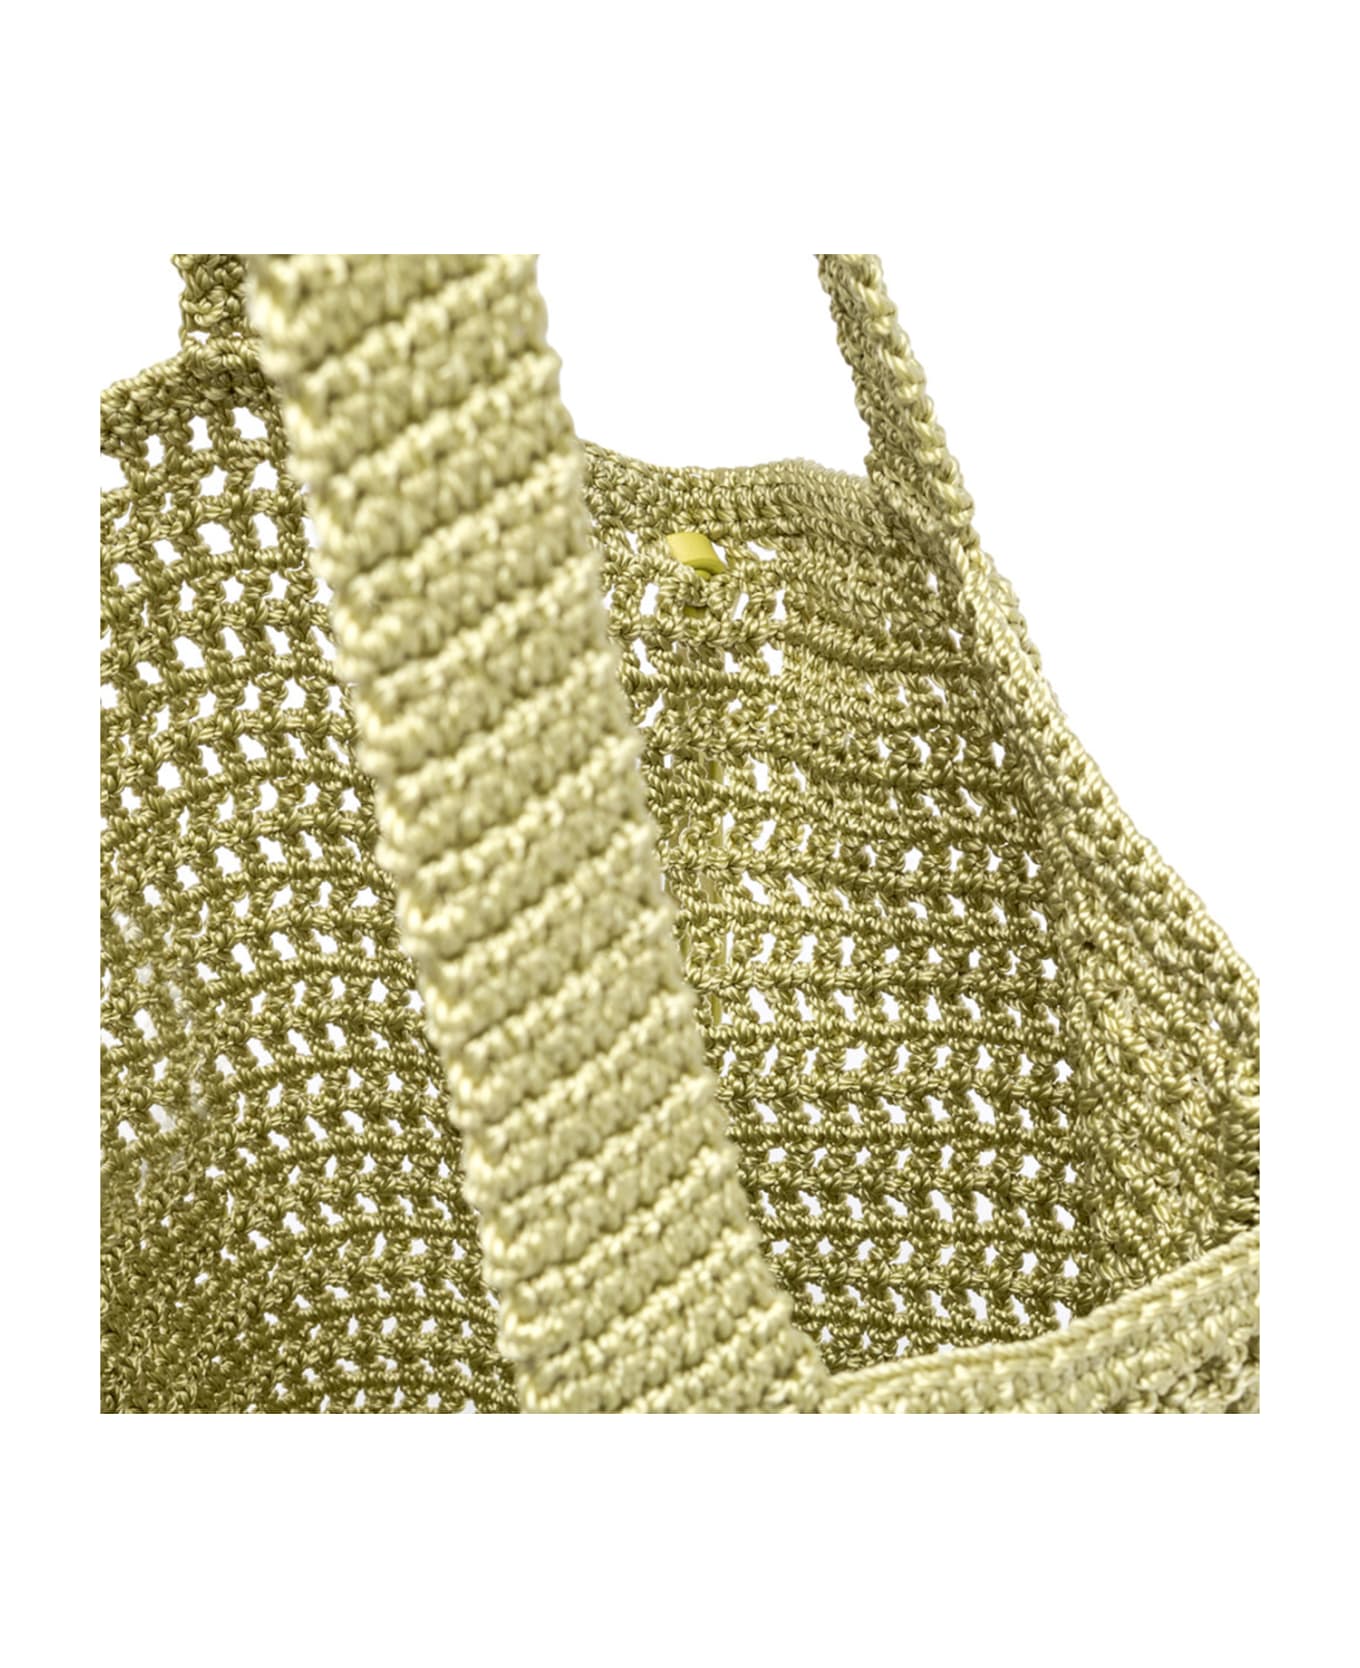 Gianni Chiarini Vittoria Yellow Shopping Bag In Crochet Fabric - SUNNY LIGHT トートバッグ